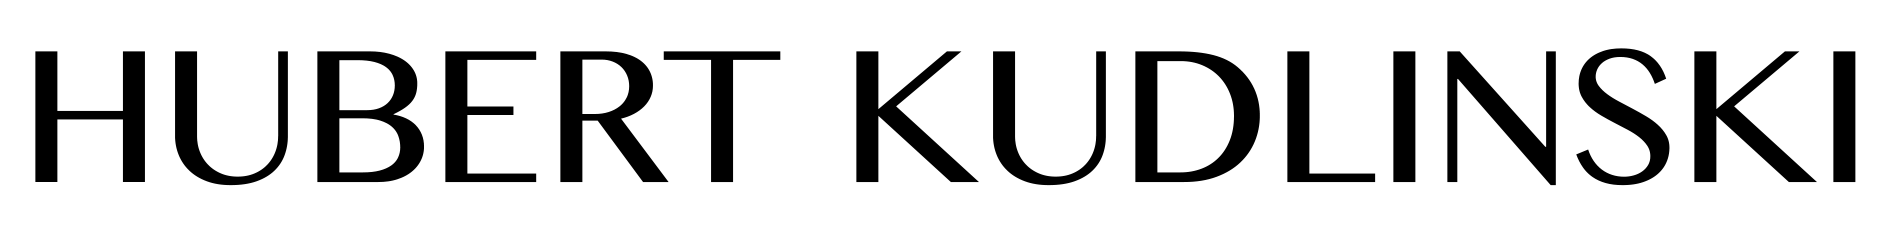 Hubert_Kudlinski_logo